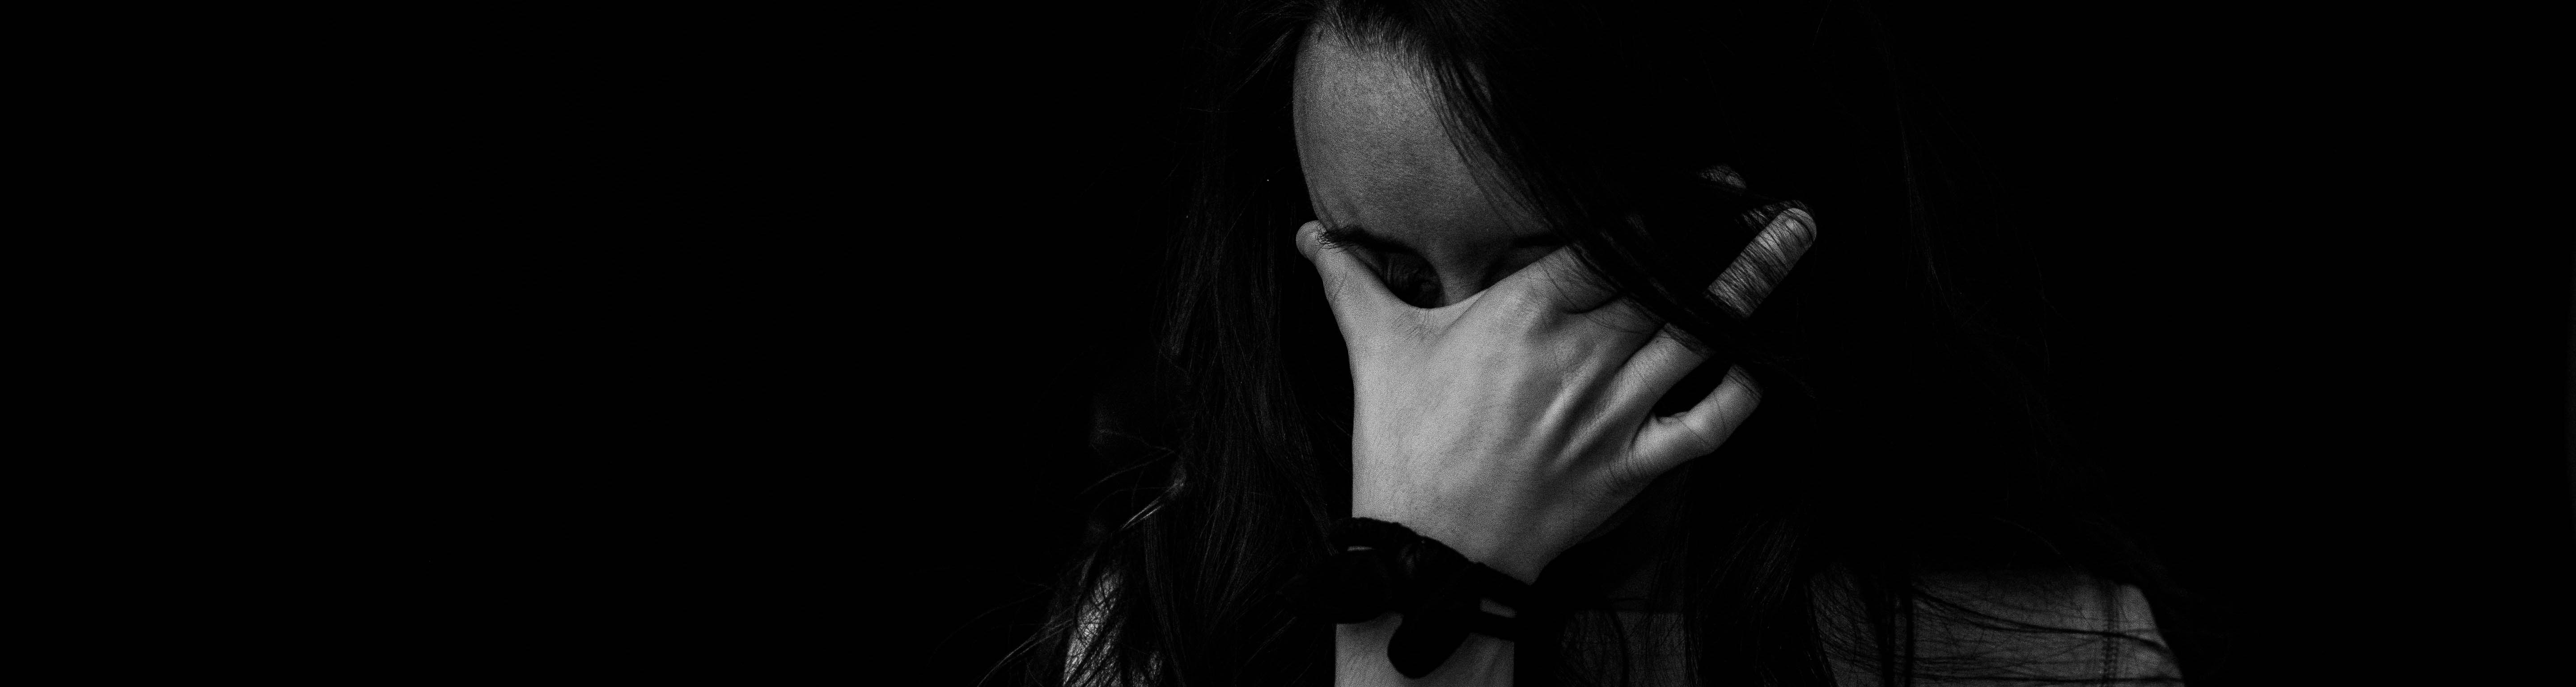 Distraught girl-Photo by Juan Pablo Arenas